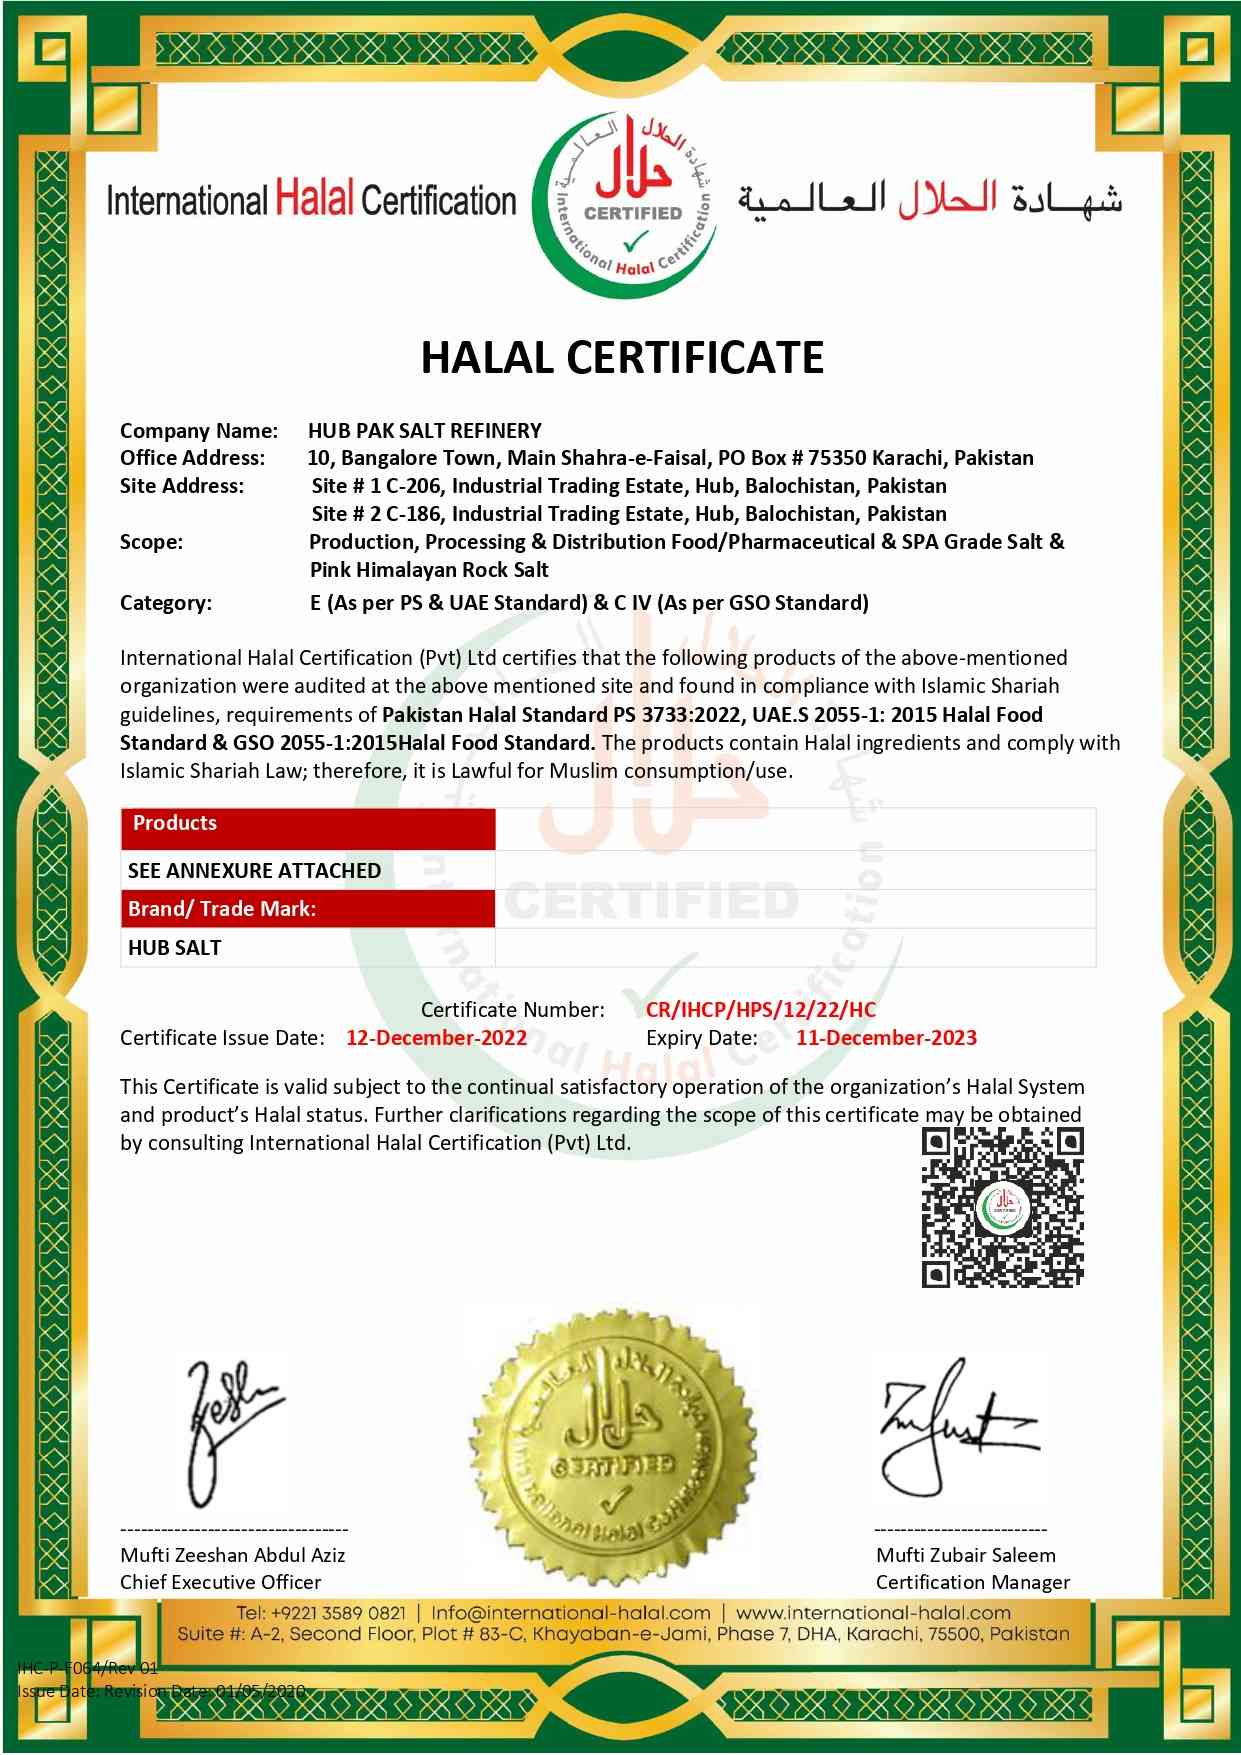 IHC Halal Certificate-HUB PAK SALT REFINERY-2022-2023